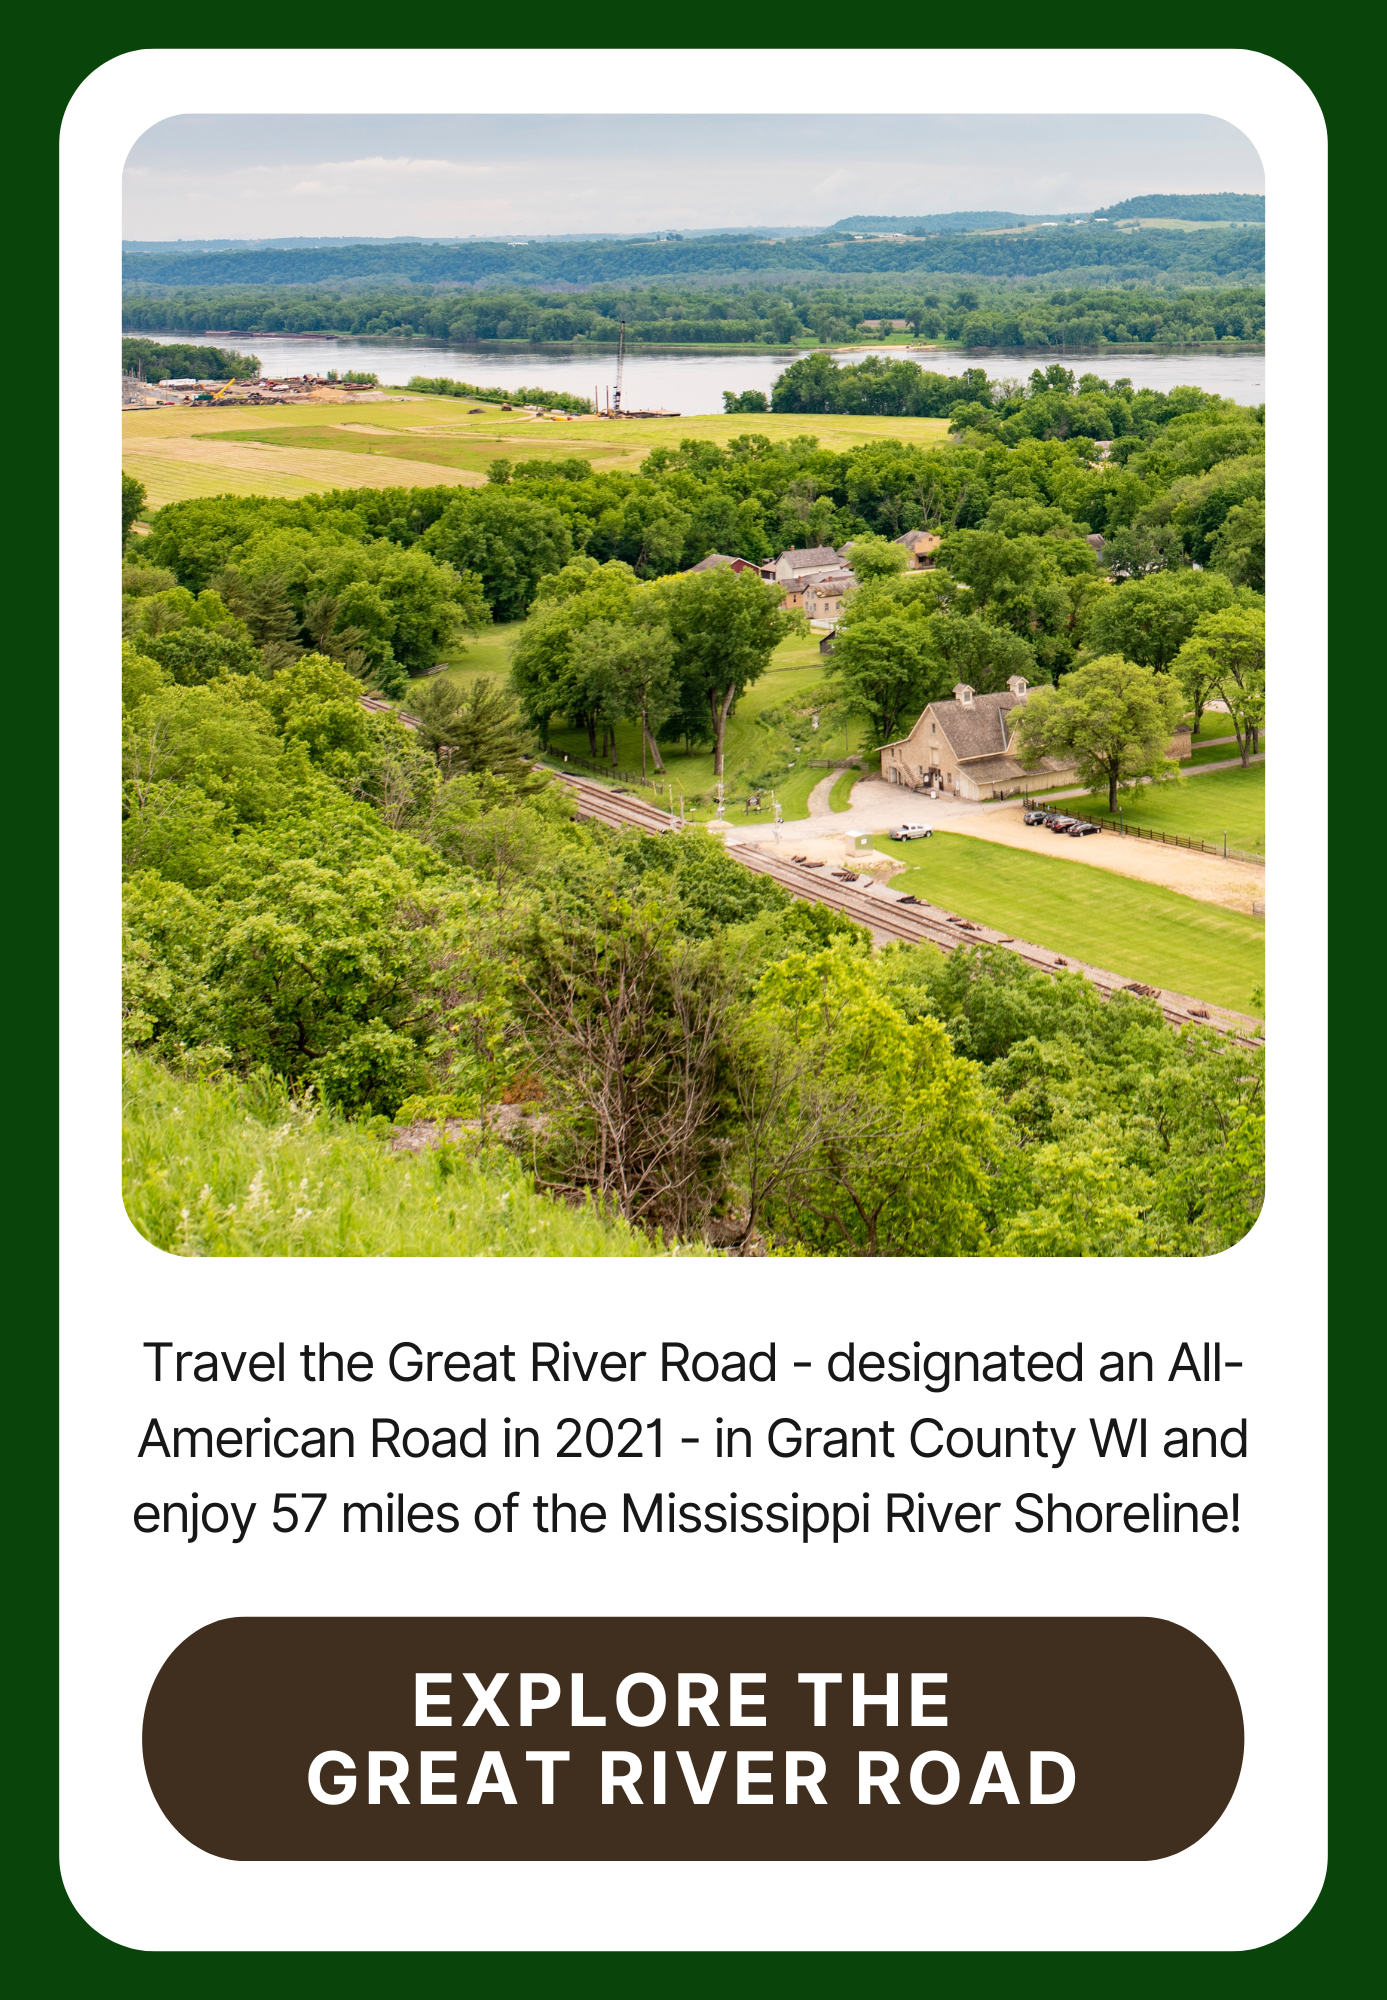 Great River Road